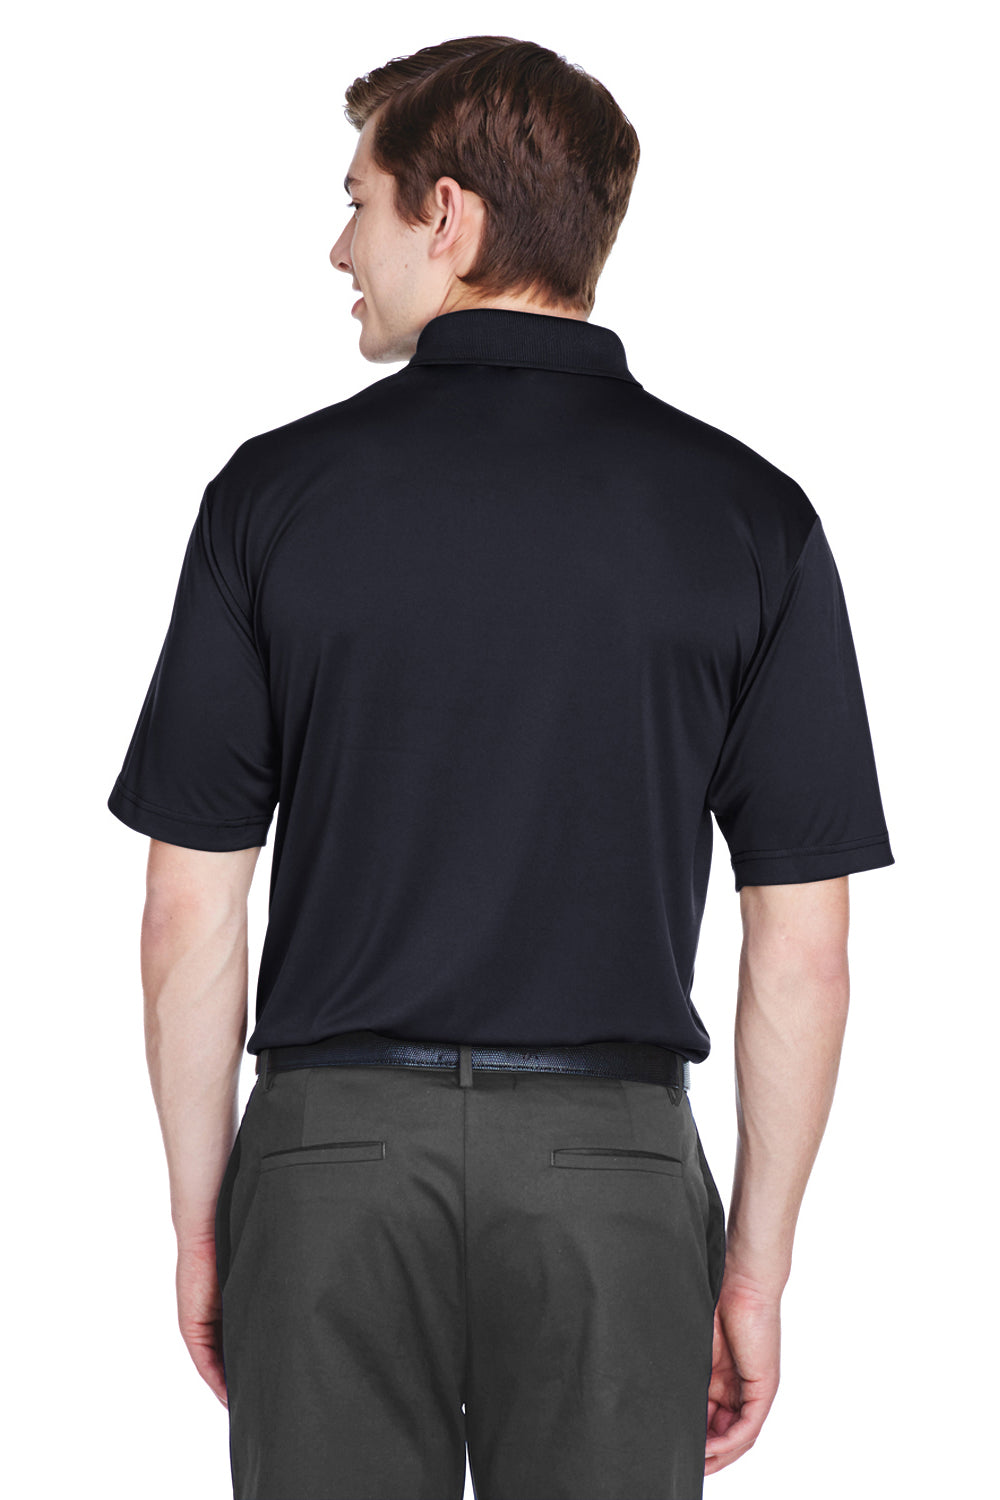 UltraClub 8610 Mens Cool & Dry 8 Star Elite Performance Moisture Wicking Short Sleeve Polo Shirt Black Back